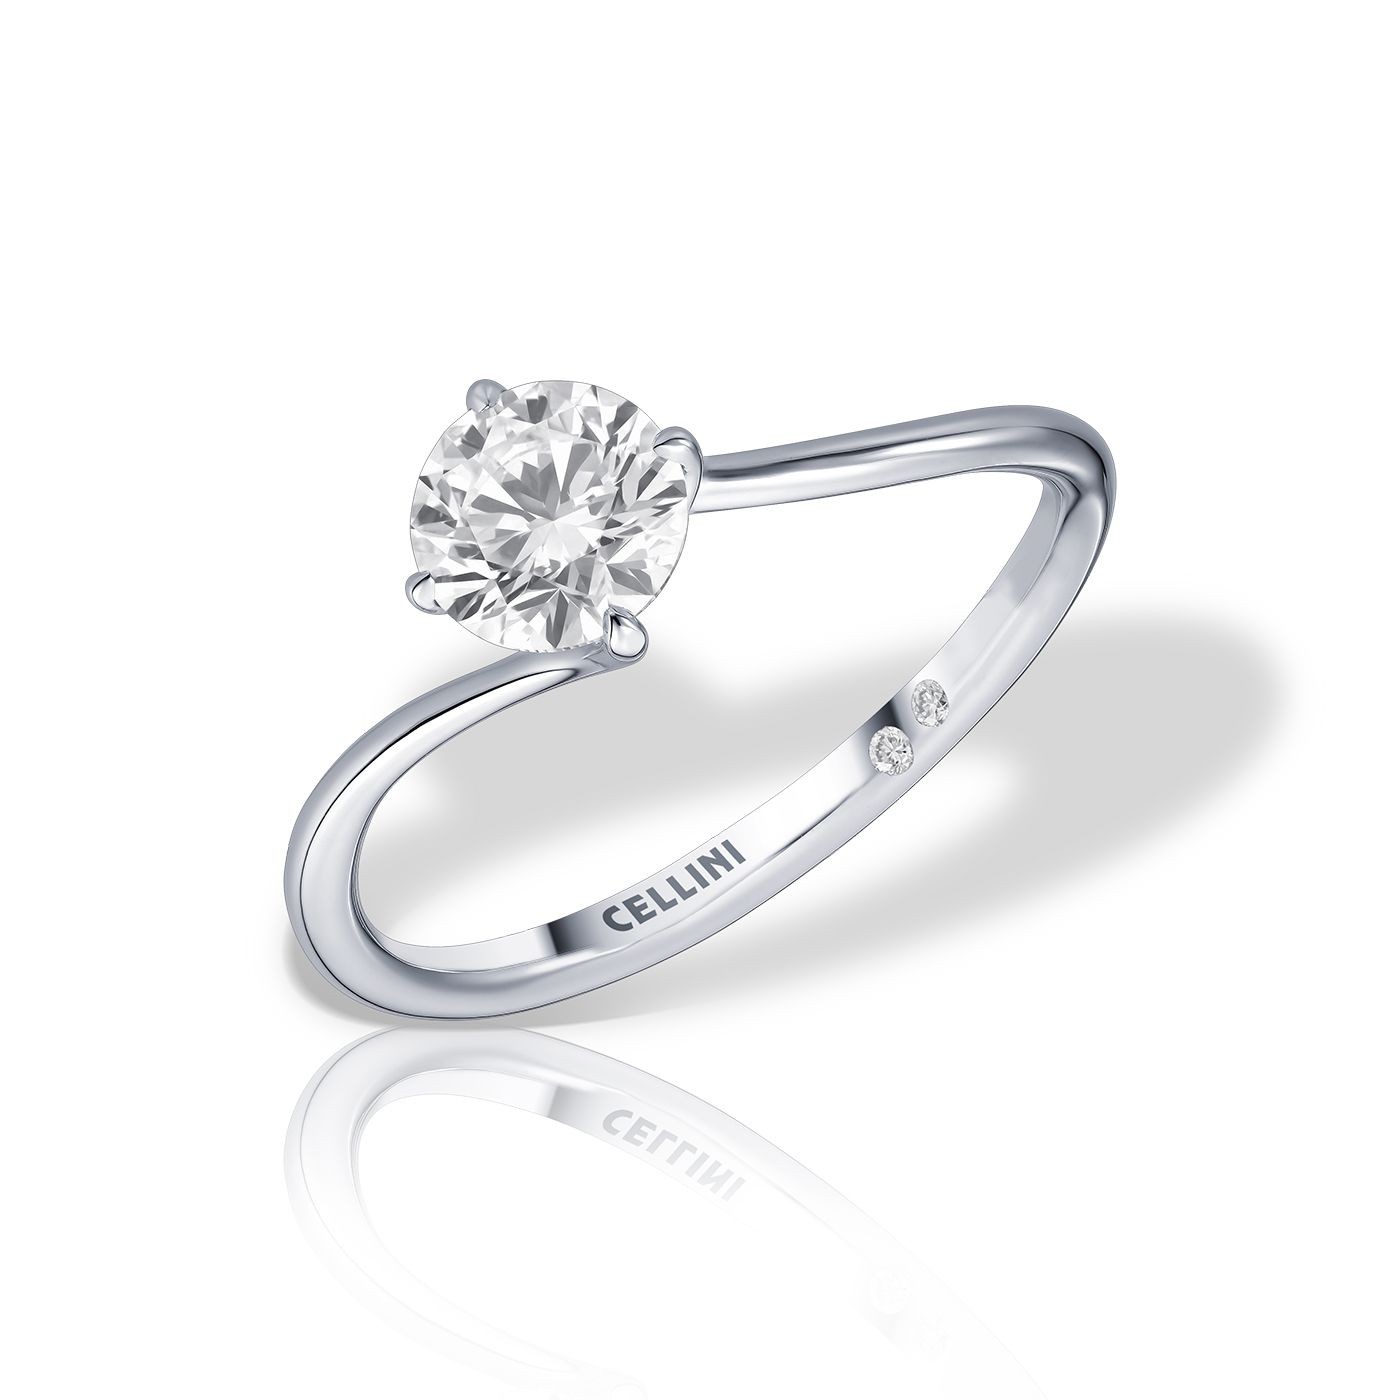 Inel de logodna FOREVER cu diamante de 0.41 carate, aur alb de 18K